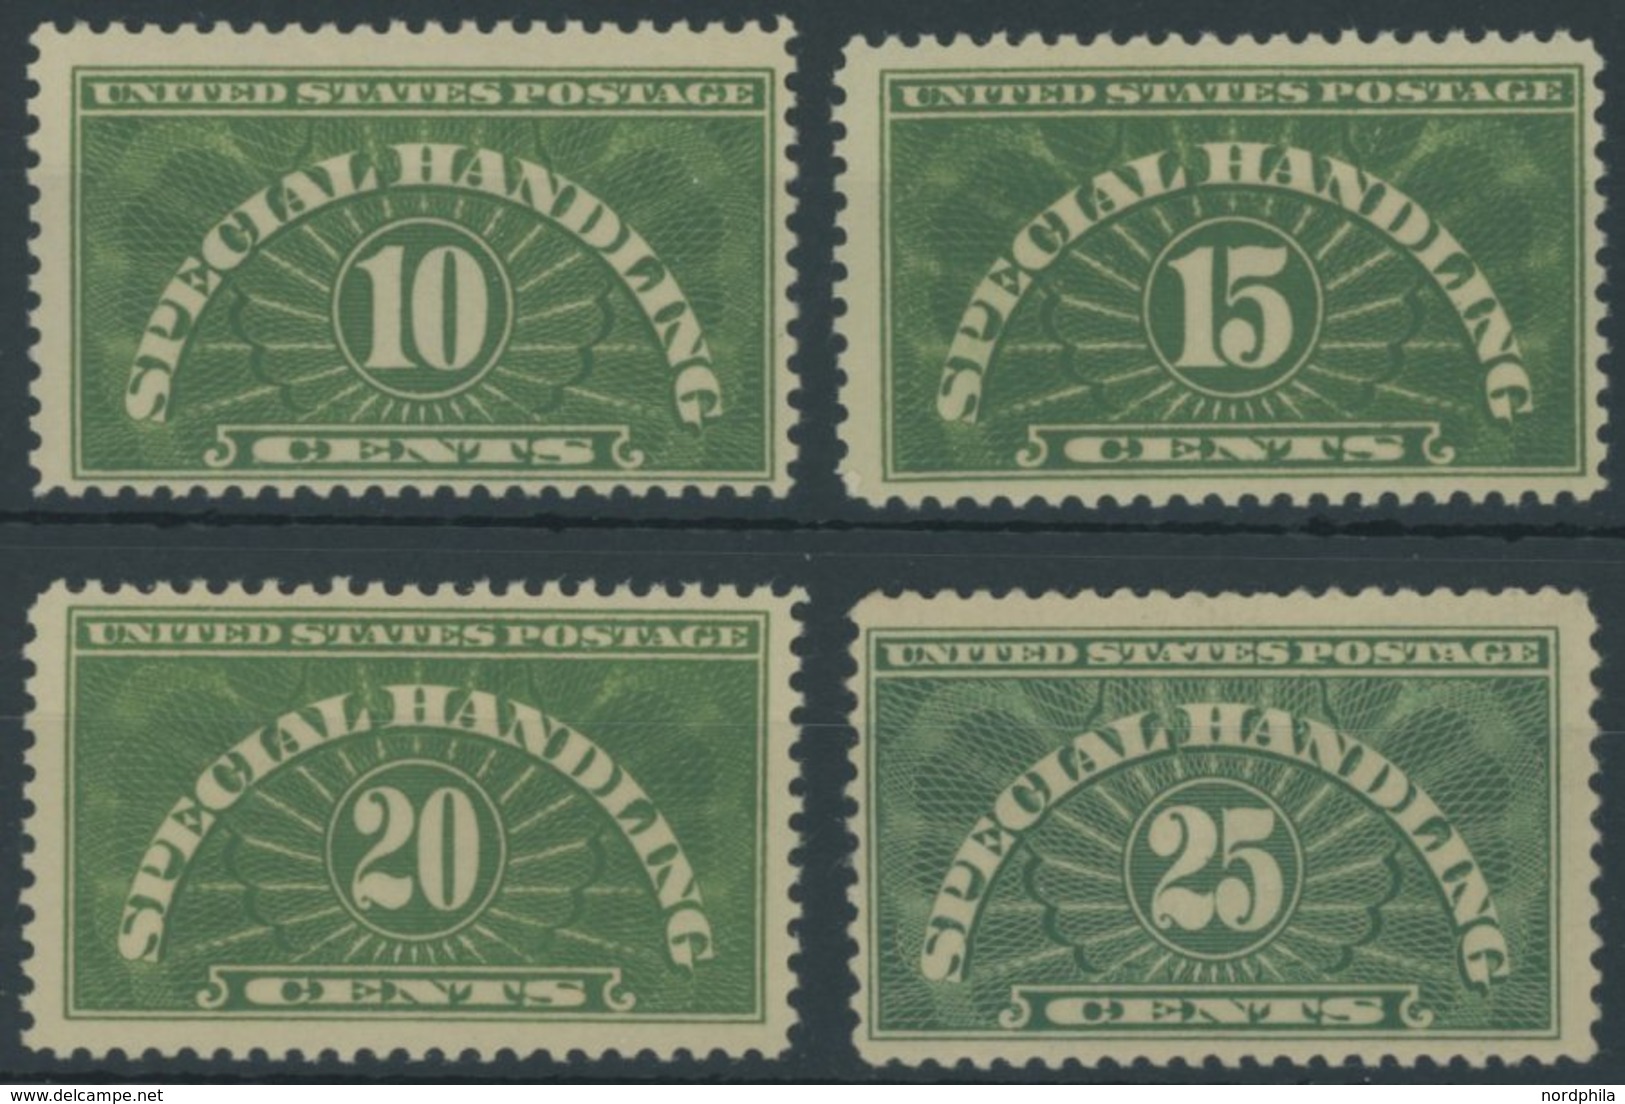 PAKETMARKEN QE 13-16 **, Scott QE 1-4, 1925, Special Handling, Postfrischer Prachtsatz, $ 54 - Colis